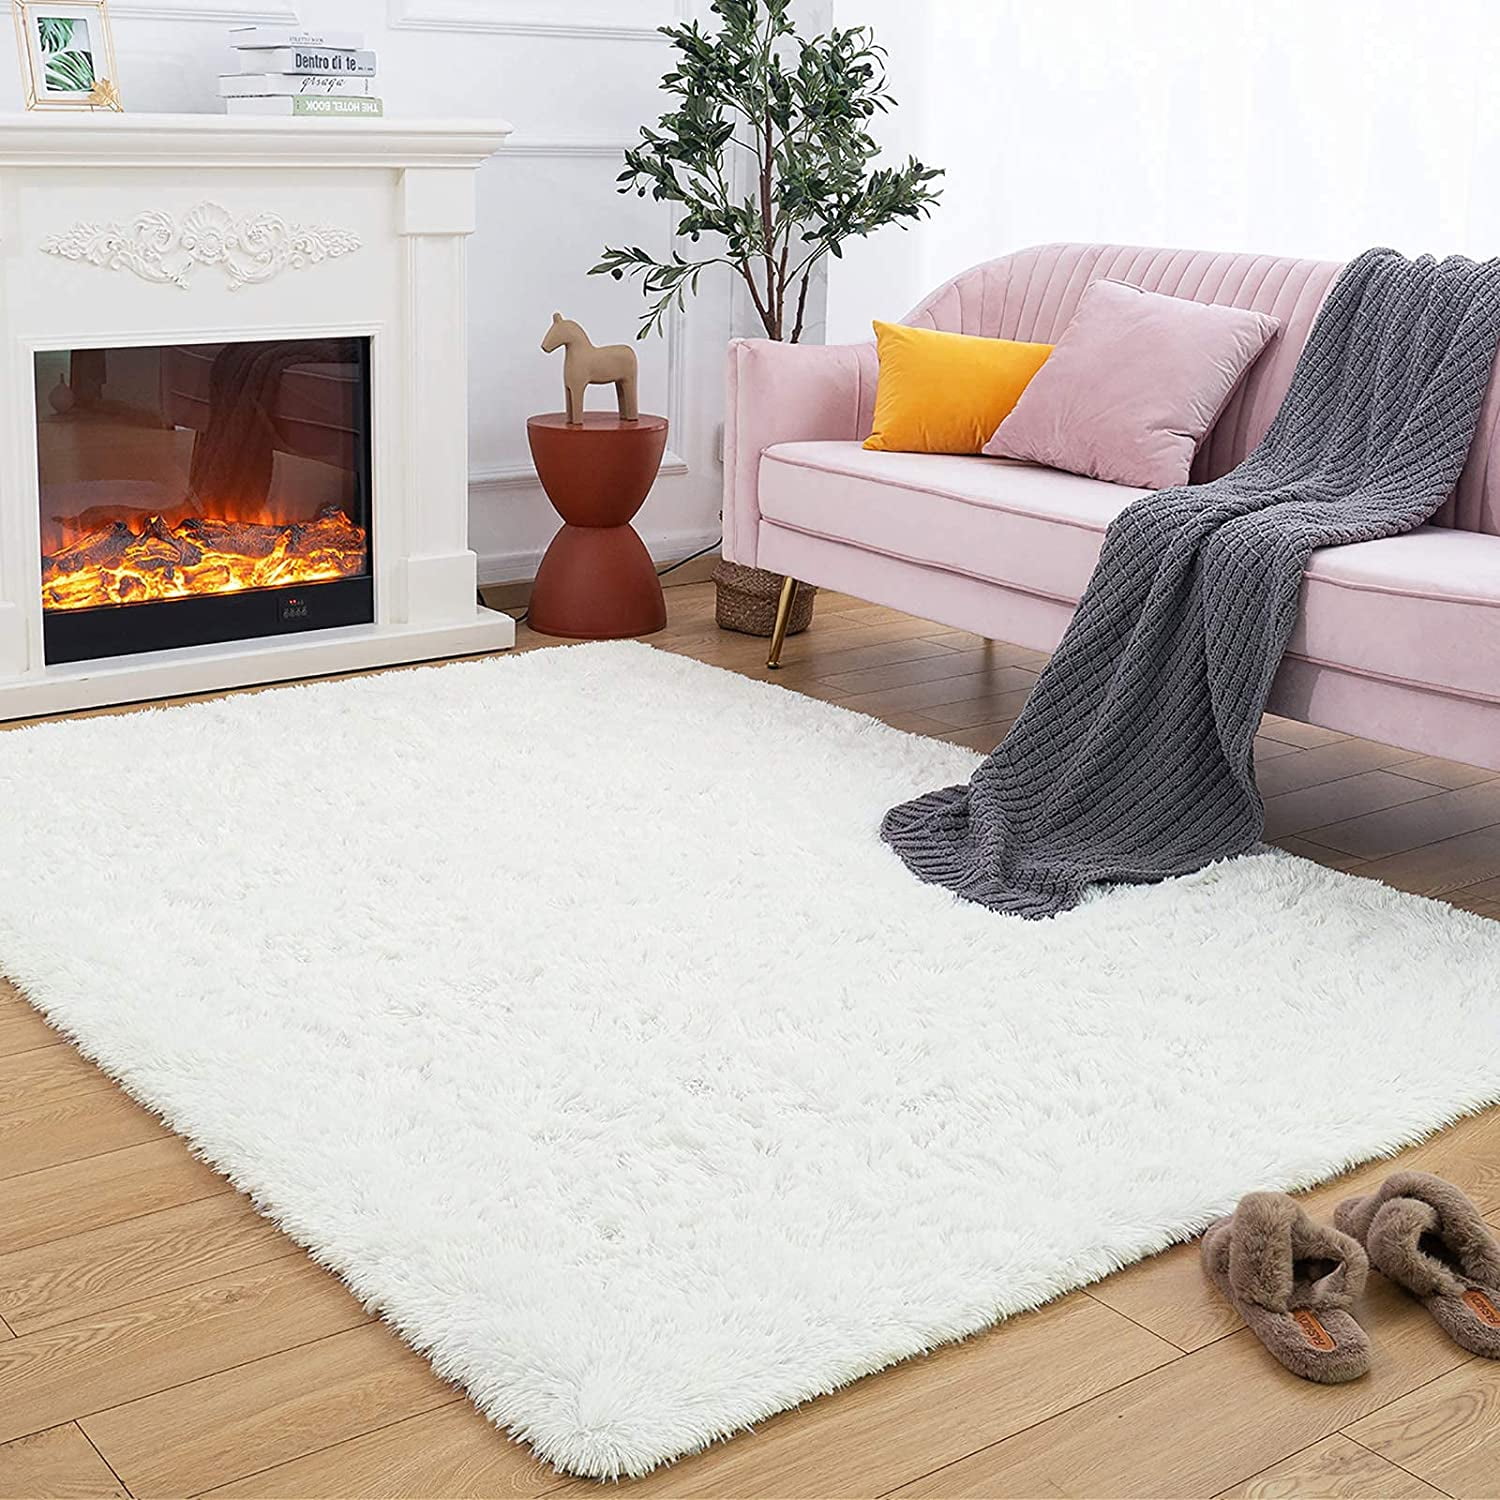 TWINNIS Luxury Fluffy Rugs Ultra Soft Shag Rug Carpet for Bedroom Living  Room,Kids Room, Nursery,4x5.3 Feet,Cream White